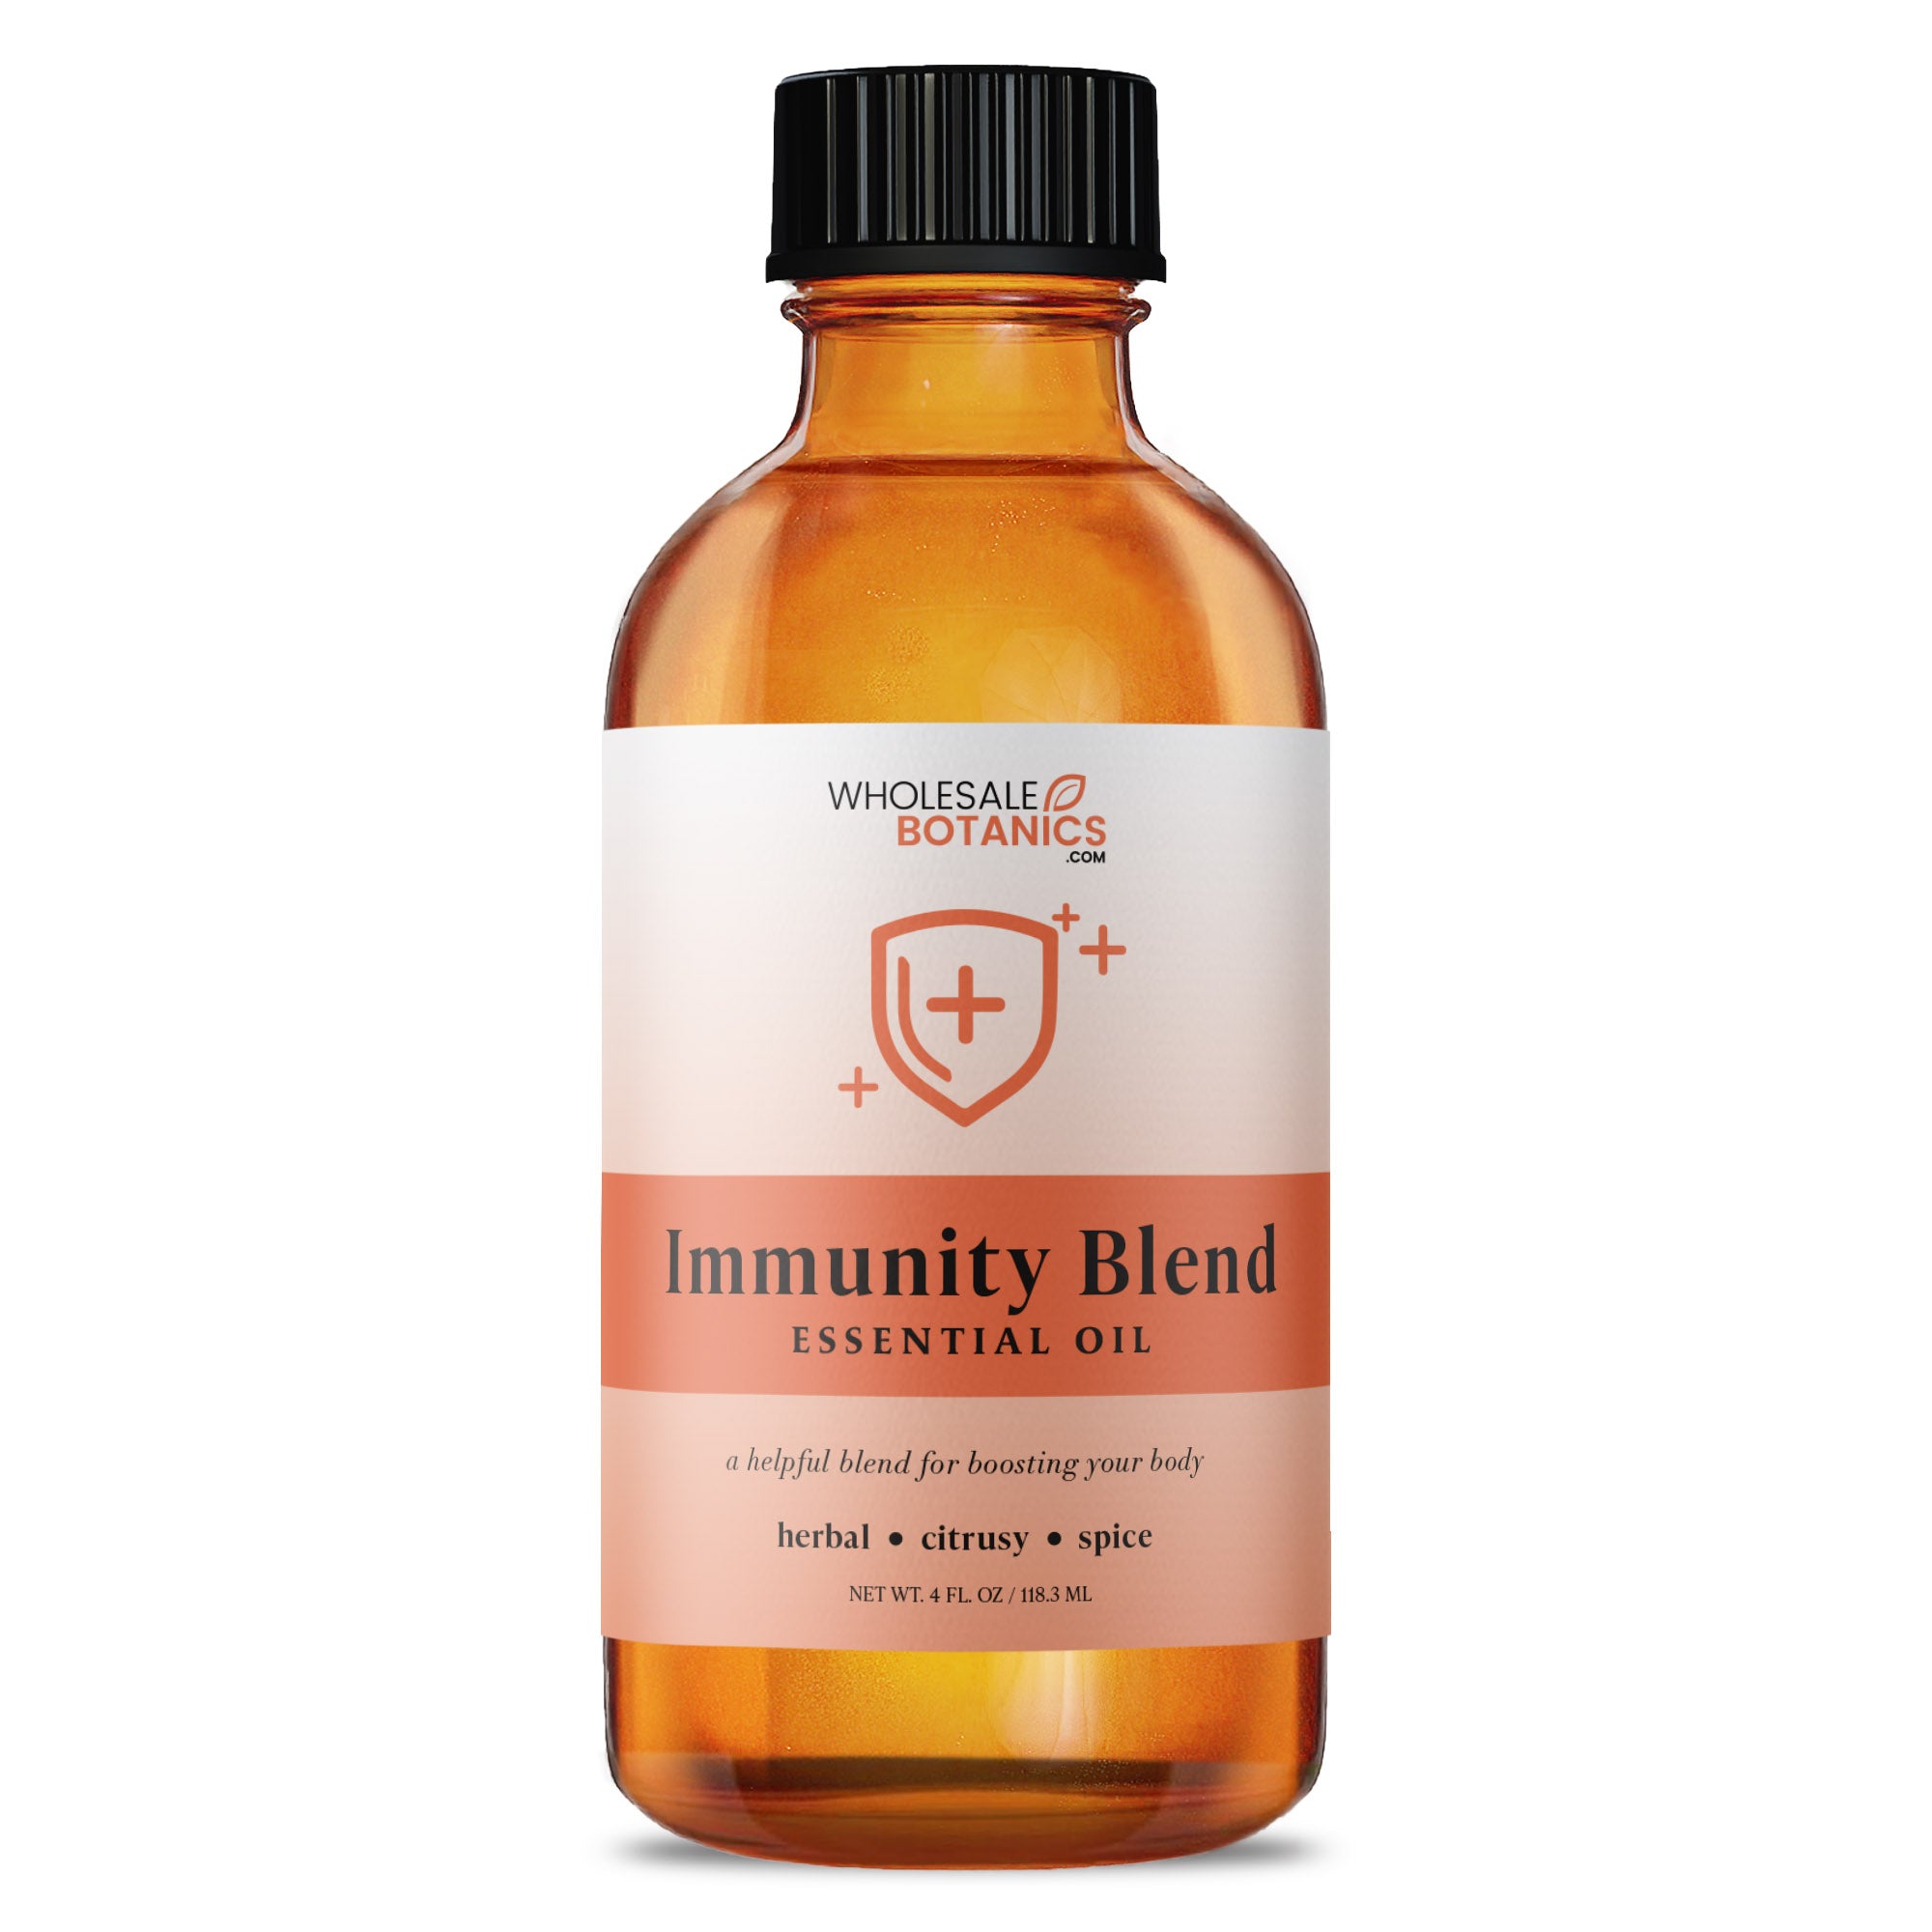 Immunity Essential Oil Blend